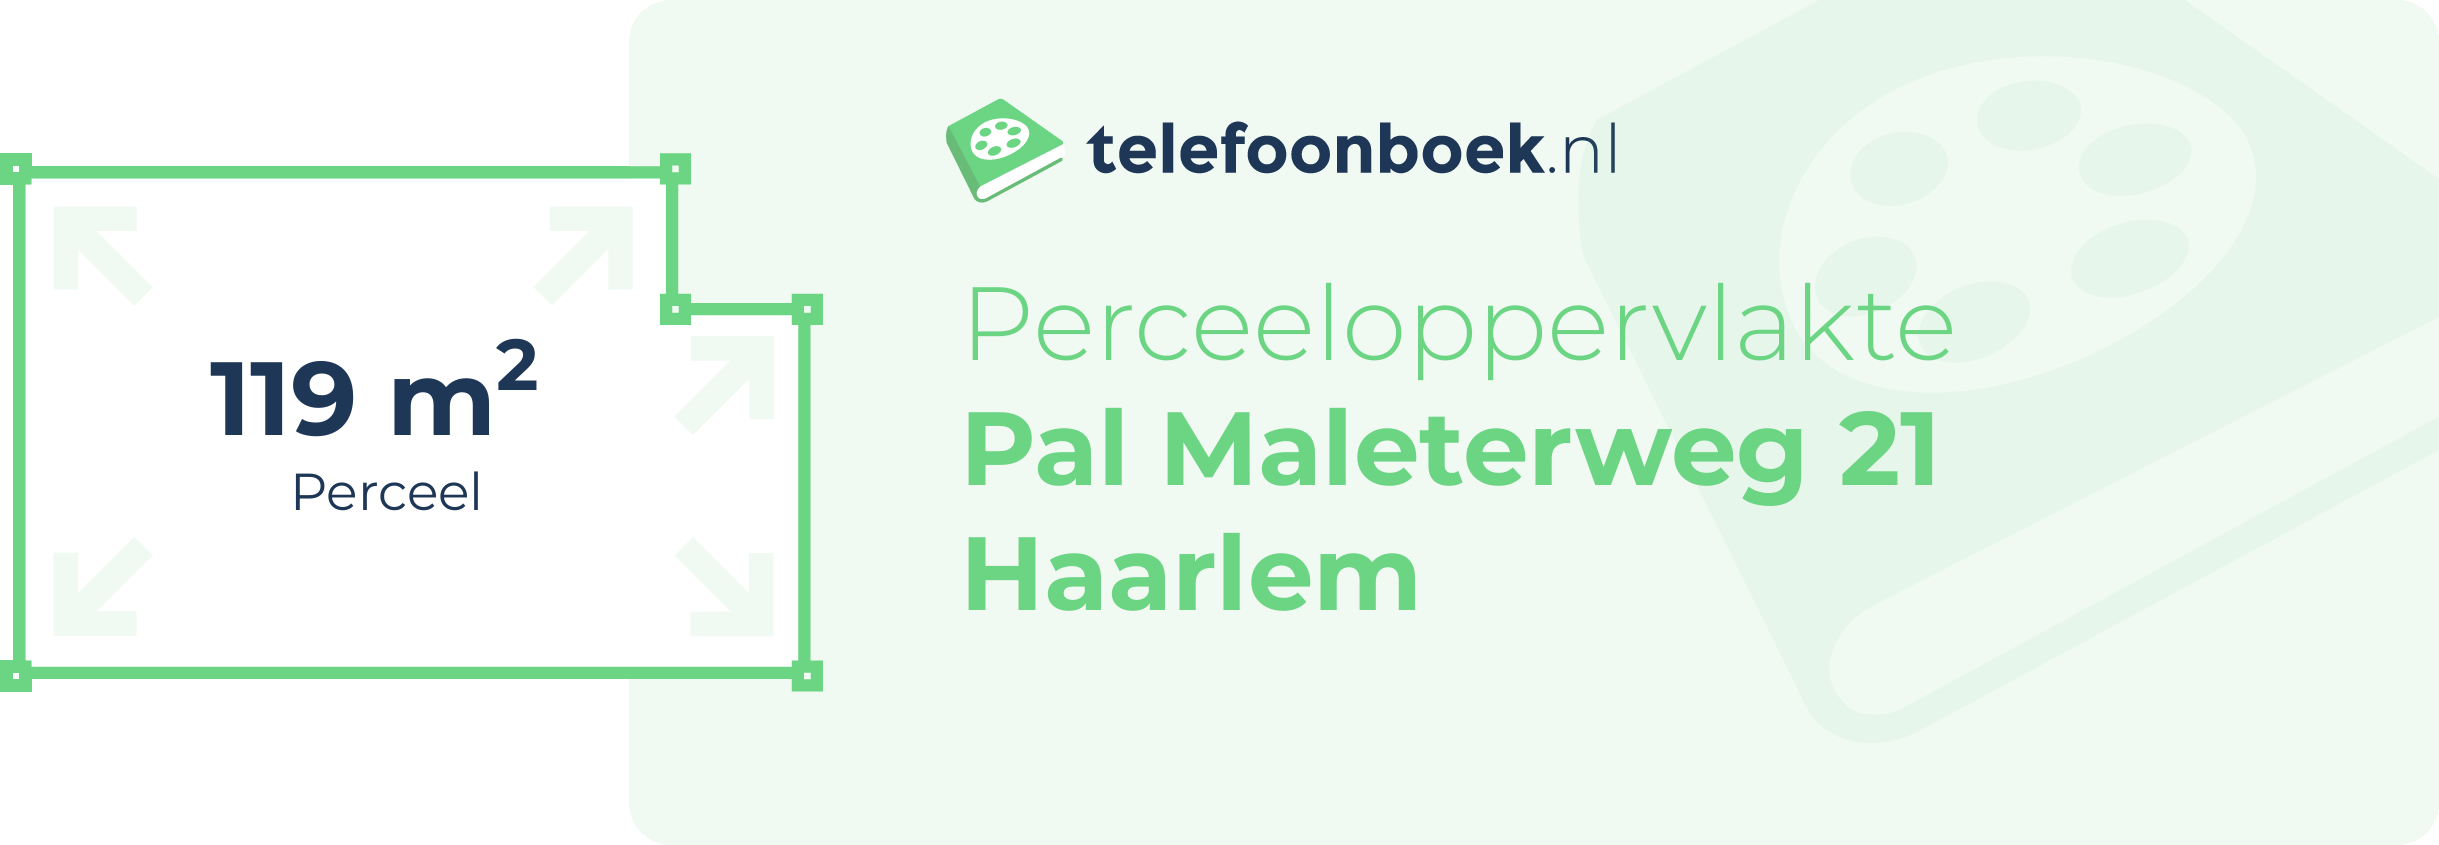 Perceeloppervlakte Pal Maleterweg 21 Haarlem